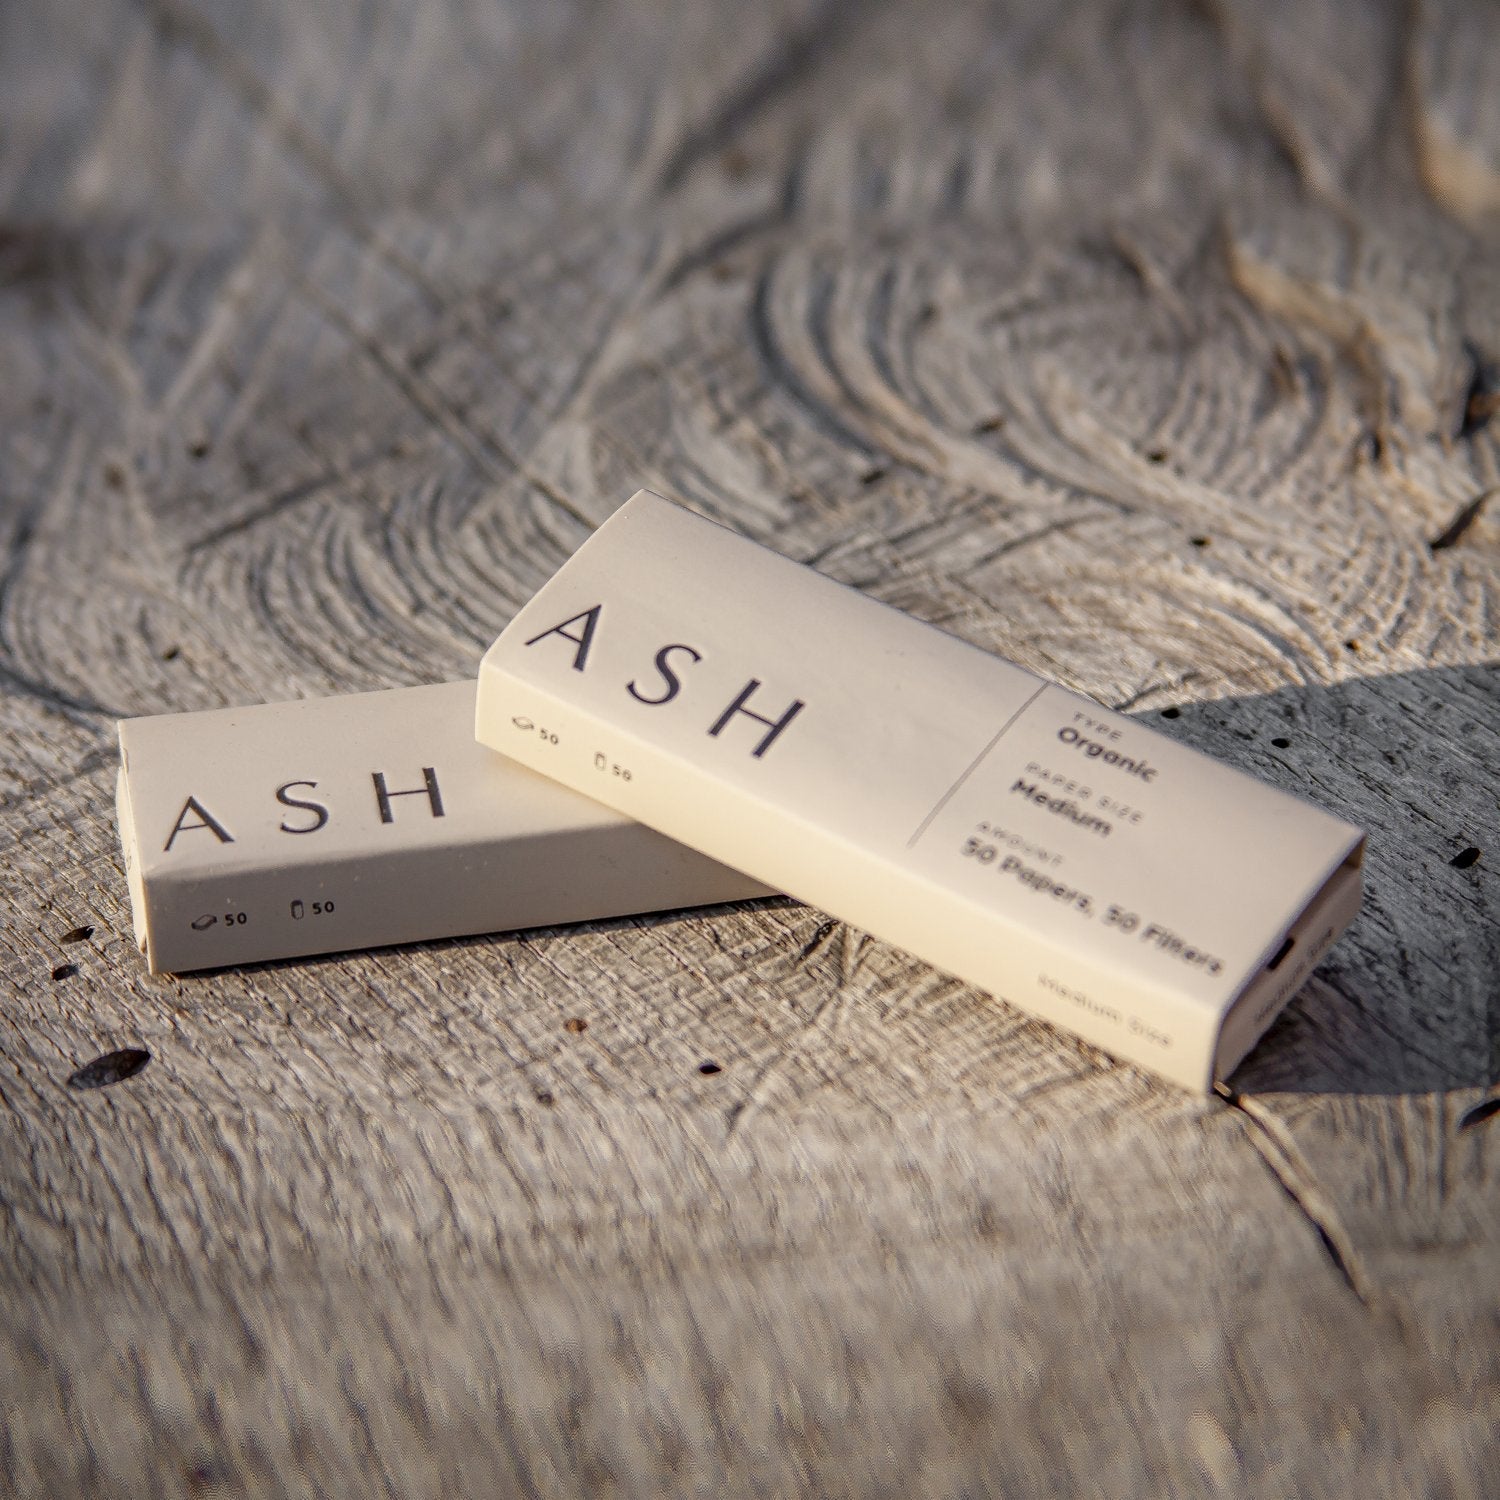  Rolling Paper | Medium | Organic by ASH ASH Perfumarie